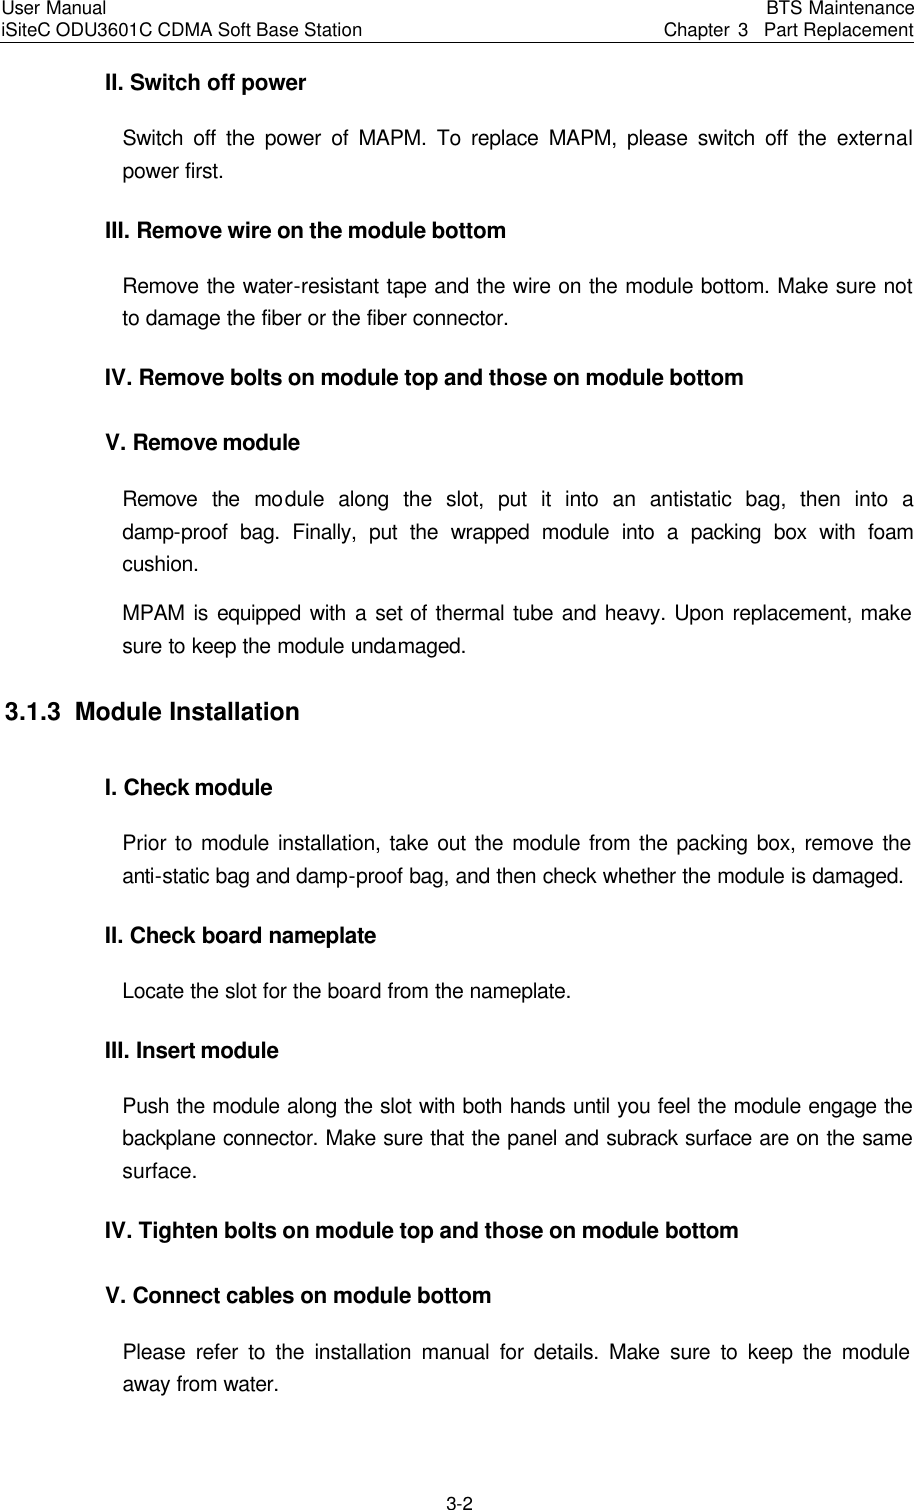 Page 93 of Huawei Technologies ODU3601C-800 CDMA Base Station User Manual 2